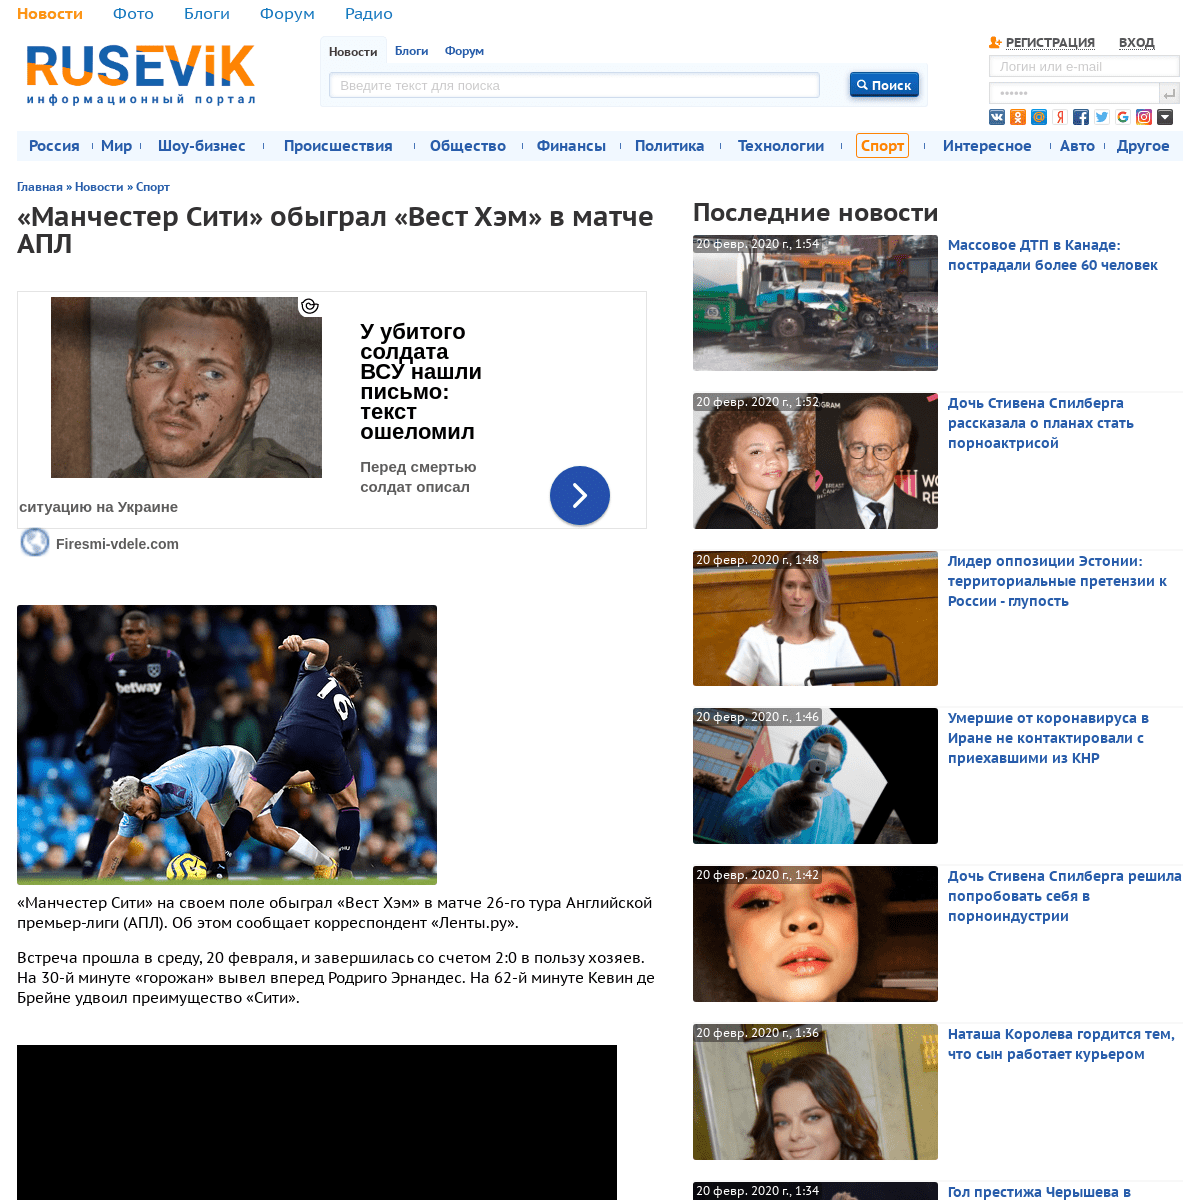 A complete backup of rusevik.ru/news/587516